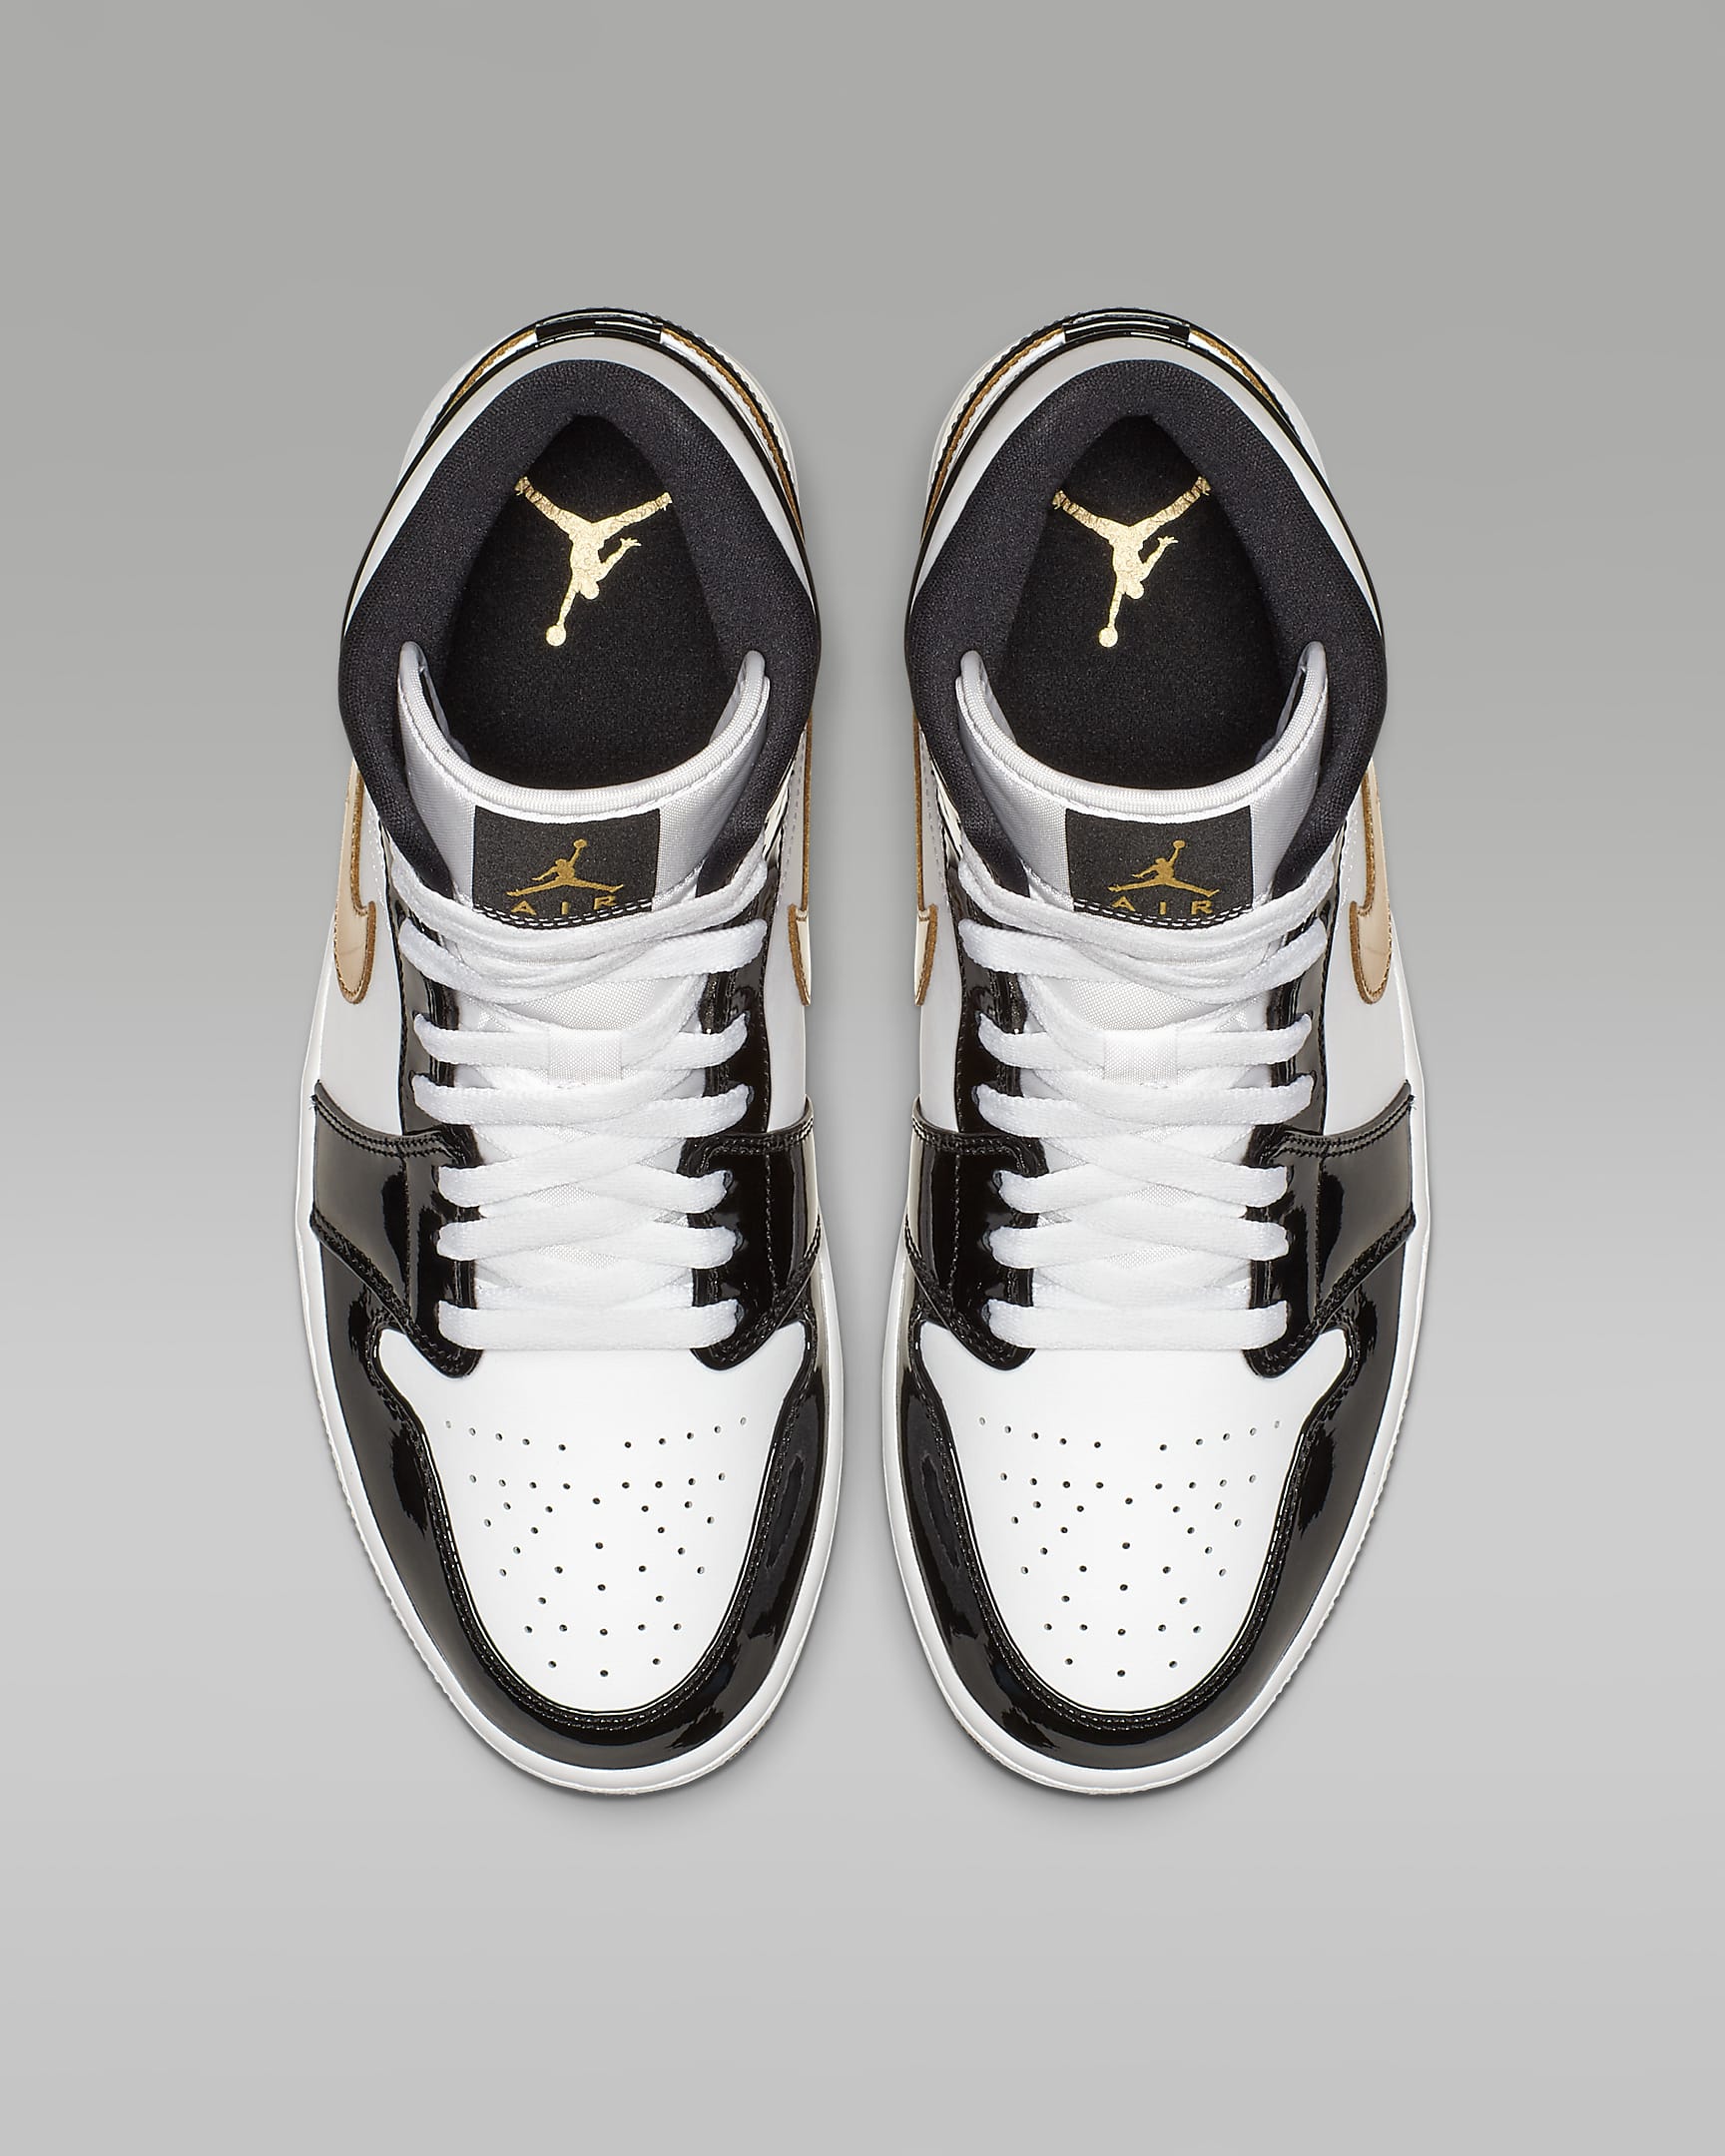 Air Jordan 1 Mid SE Men's Shoes - Black/White/Metallic Gold